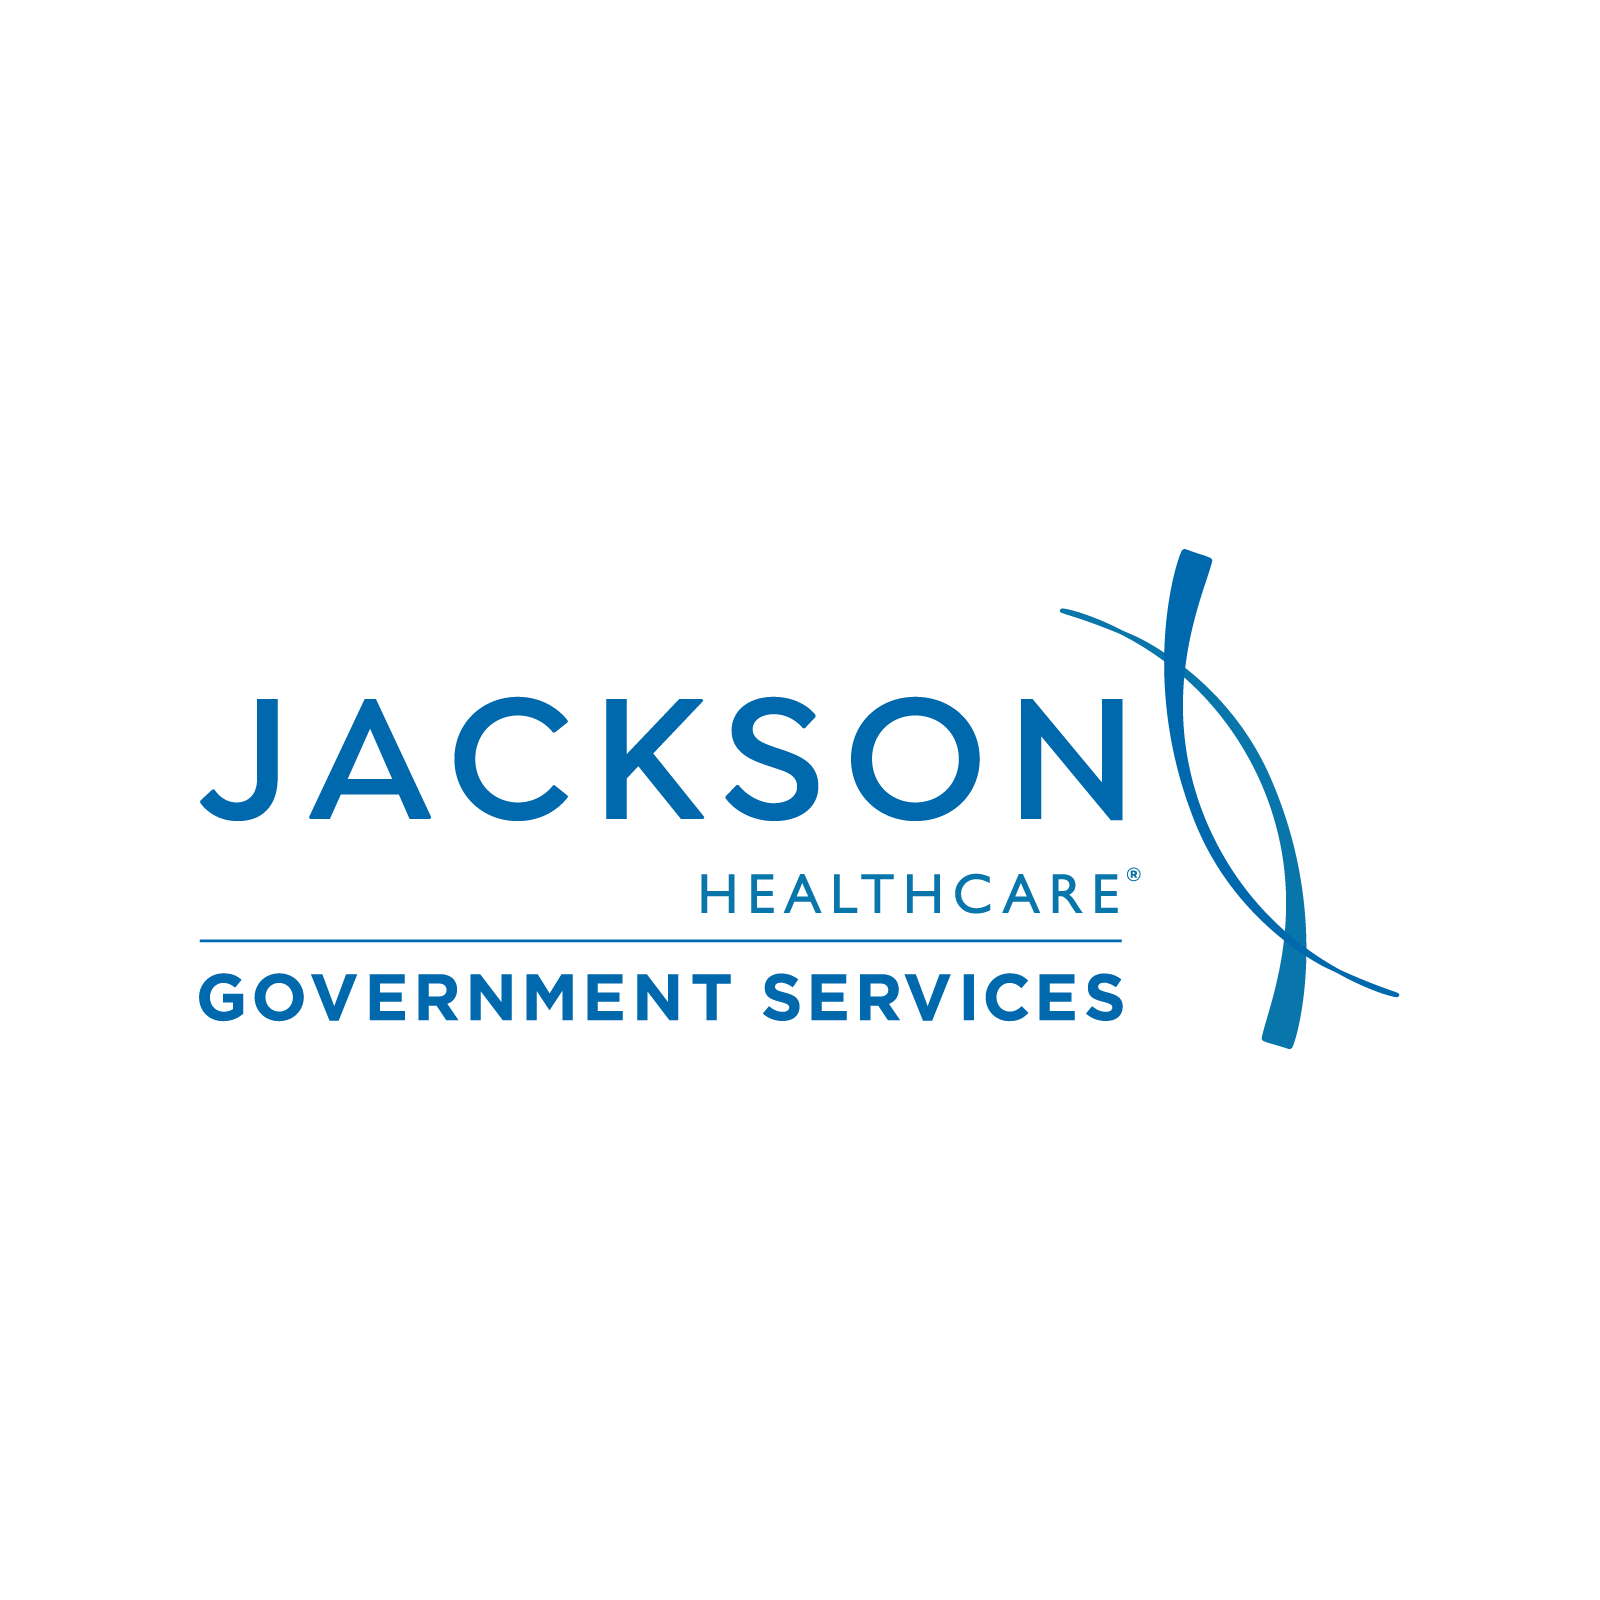 Jackson Healthcare Government Services. Press enter to read more.